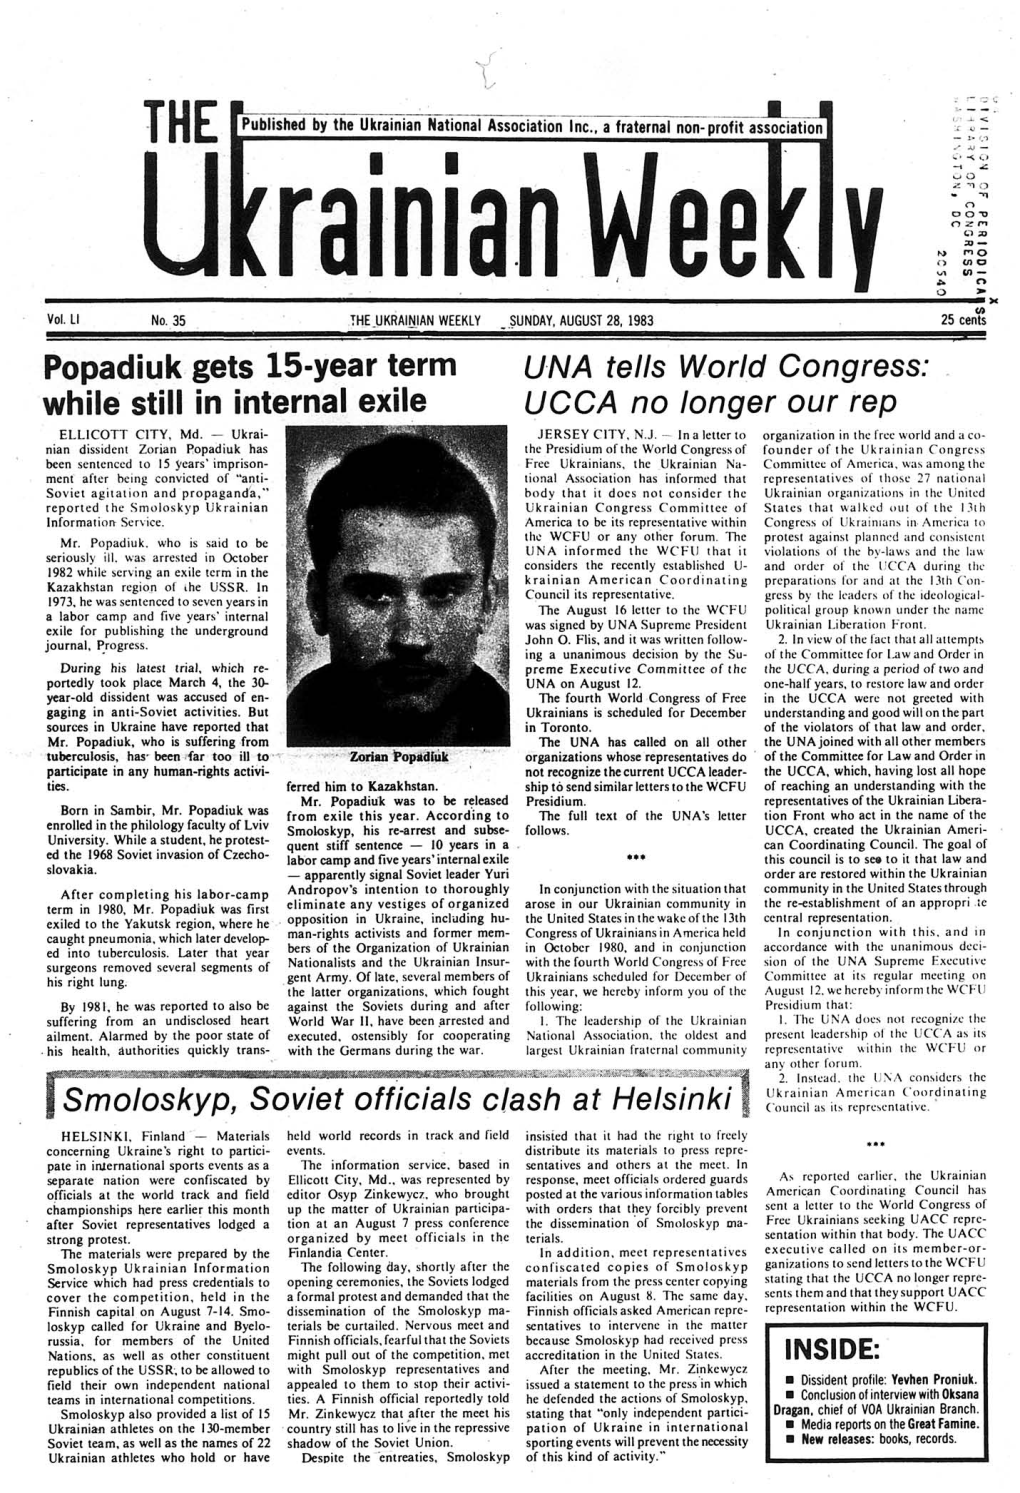 The Ukrainian Weekly 1983, No.35